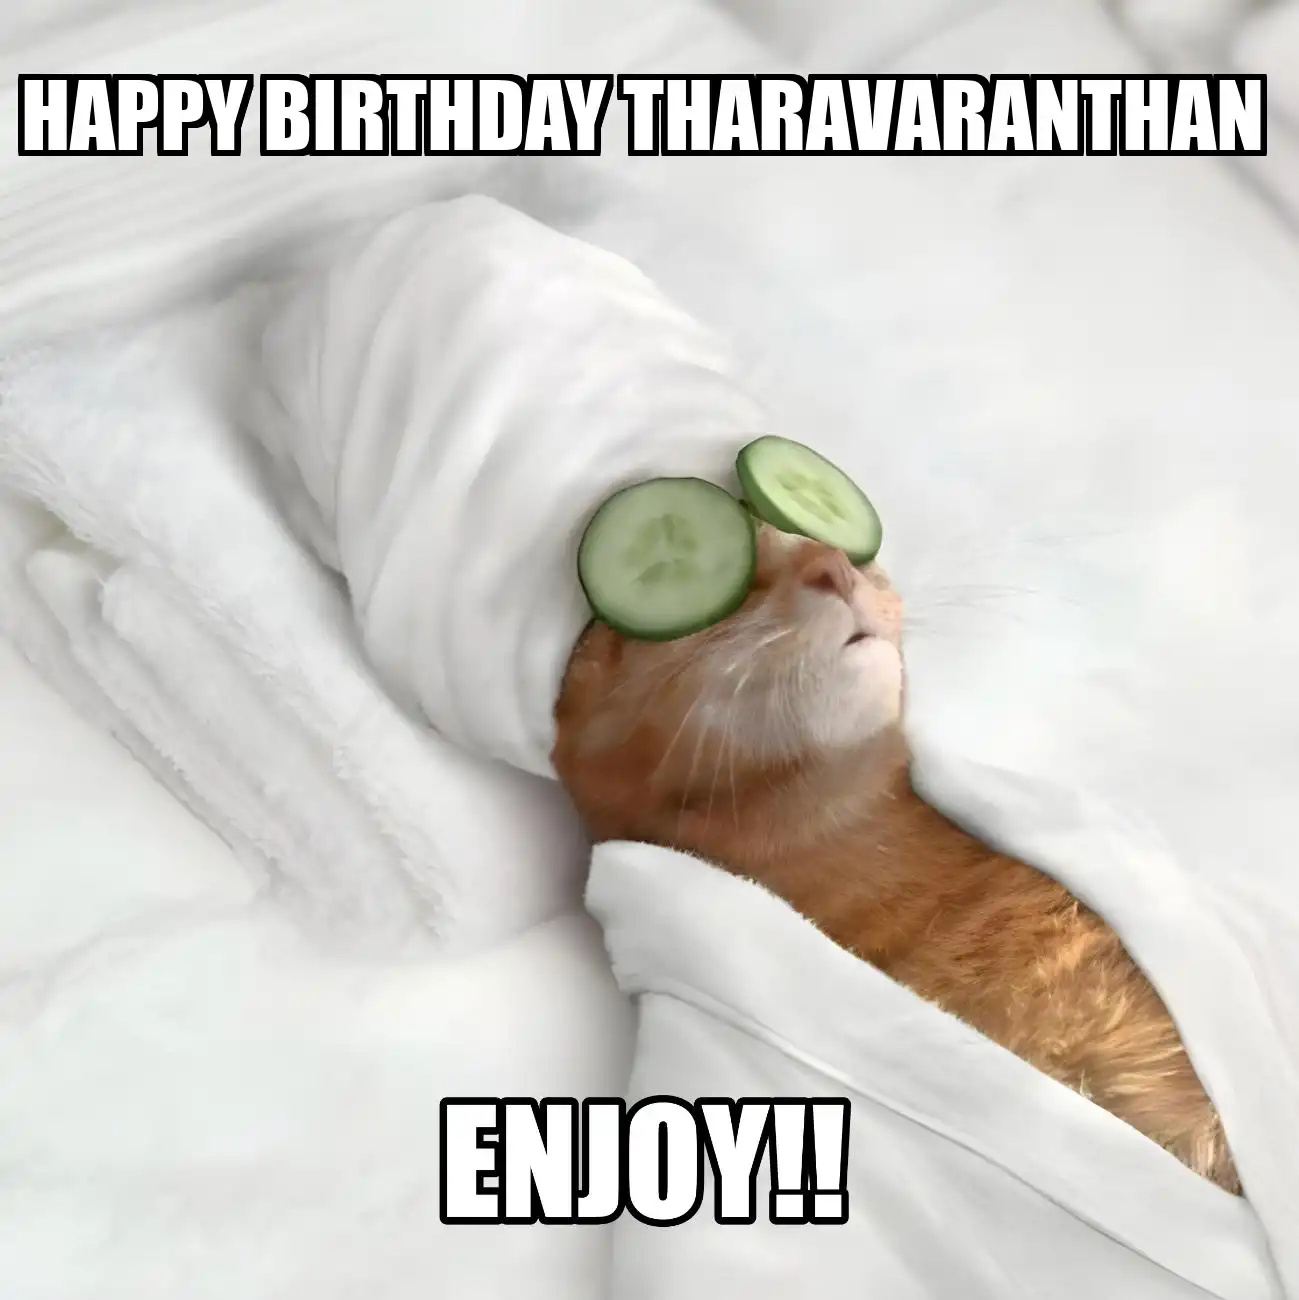 Happy Birthday Tharavaranthan Enjoy Cat Meme